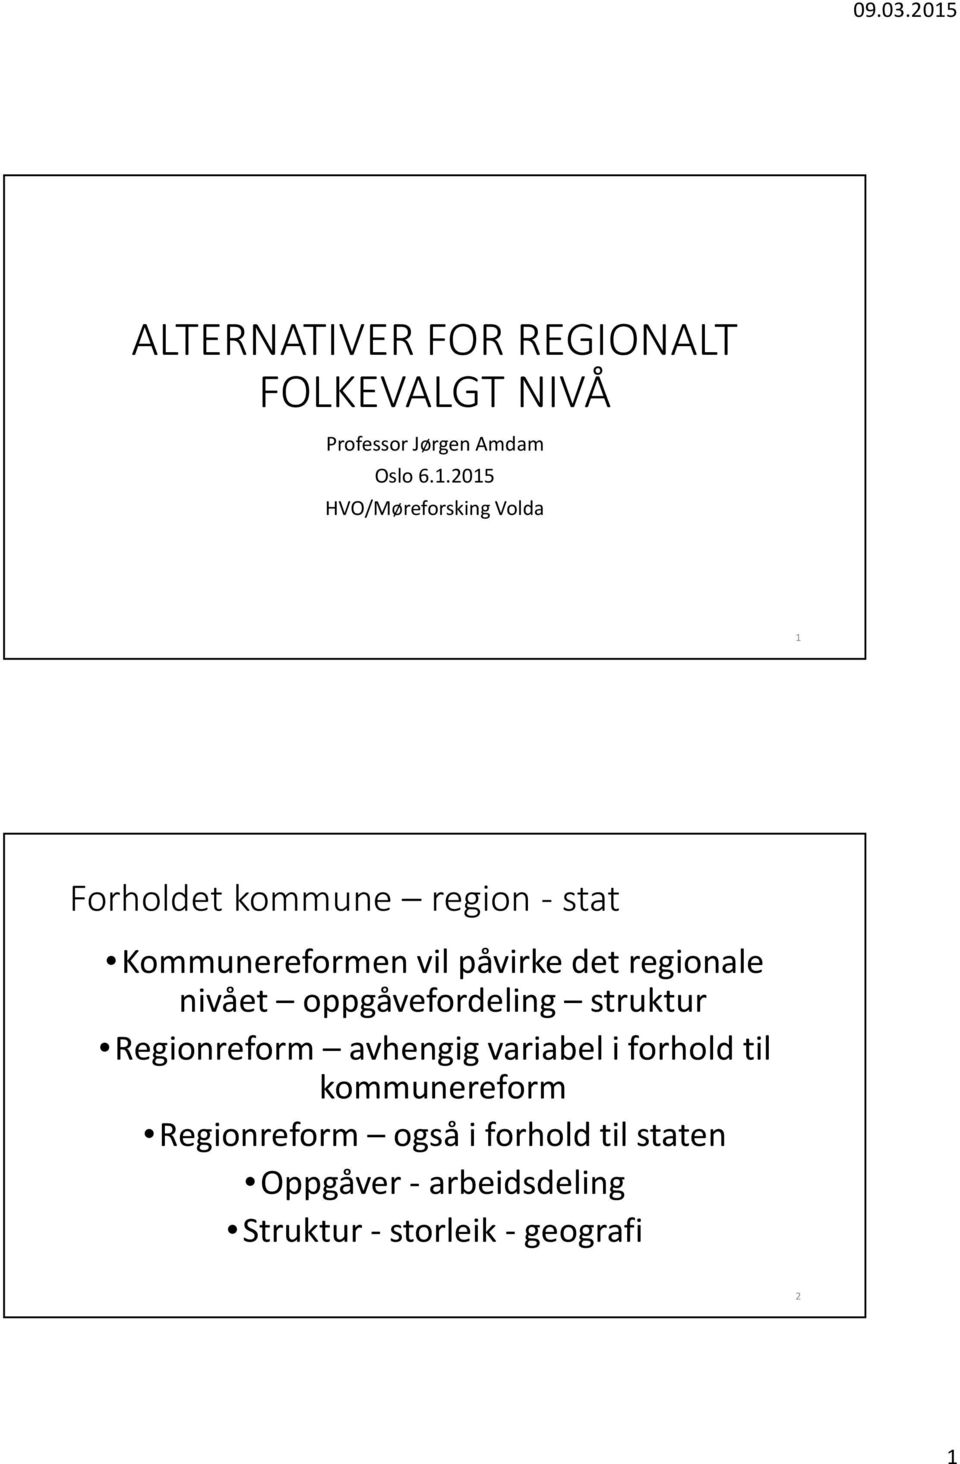 det regionale nivået oppgåvefordeling struktur Regionreform avhengig variabel i forhold til